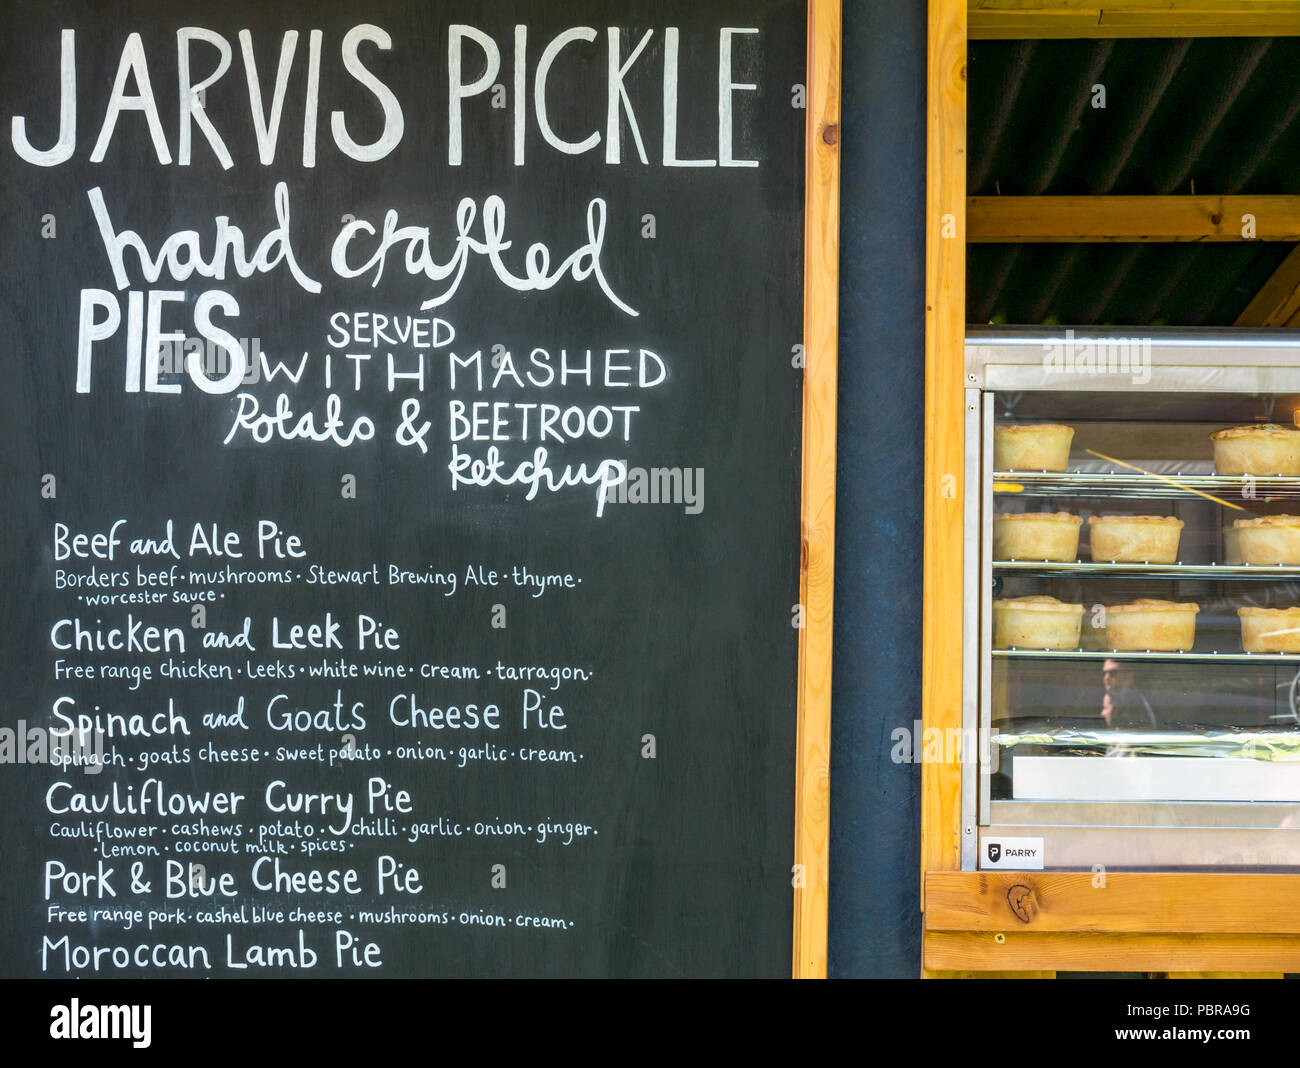 Festival de Comida de Edimburgo 2018 Jarvis Pickle empanadas cale y menú board, George Square Gardens, Edimburgo, Escocia, Reino Unido Foto de stock